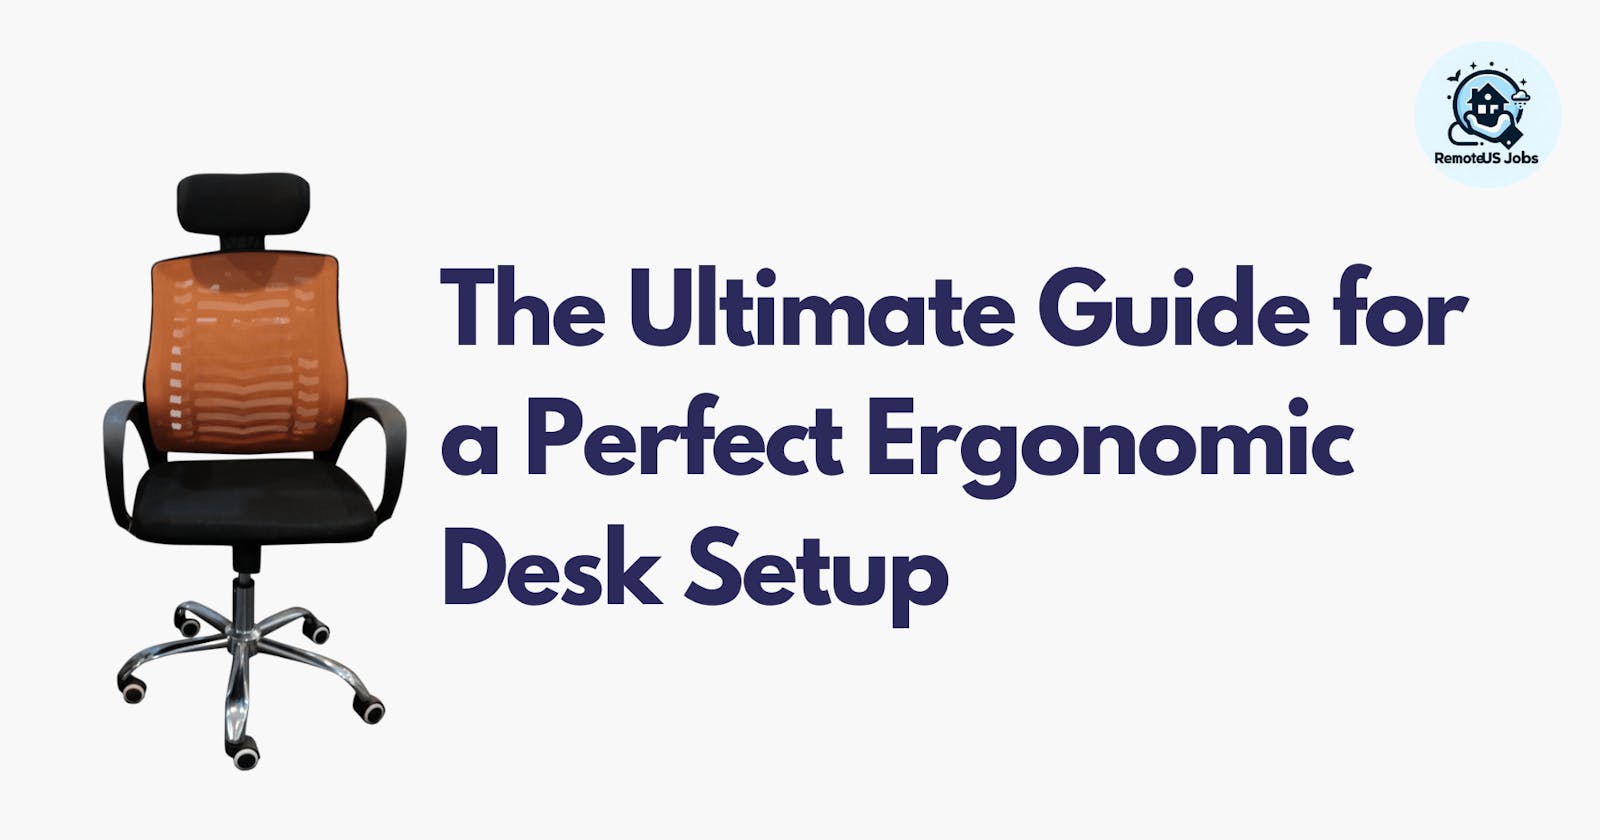 The Ultimate Guide for a Perfect Ergonomic Desk Setup